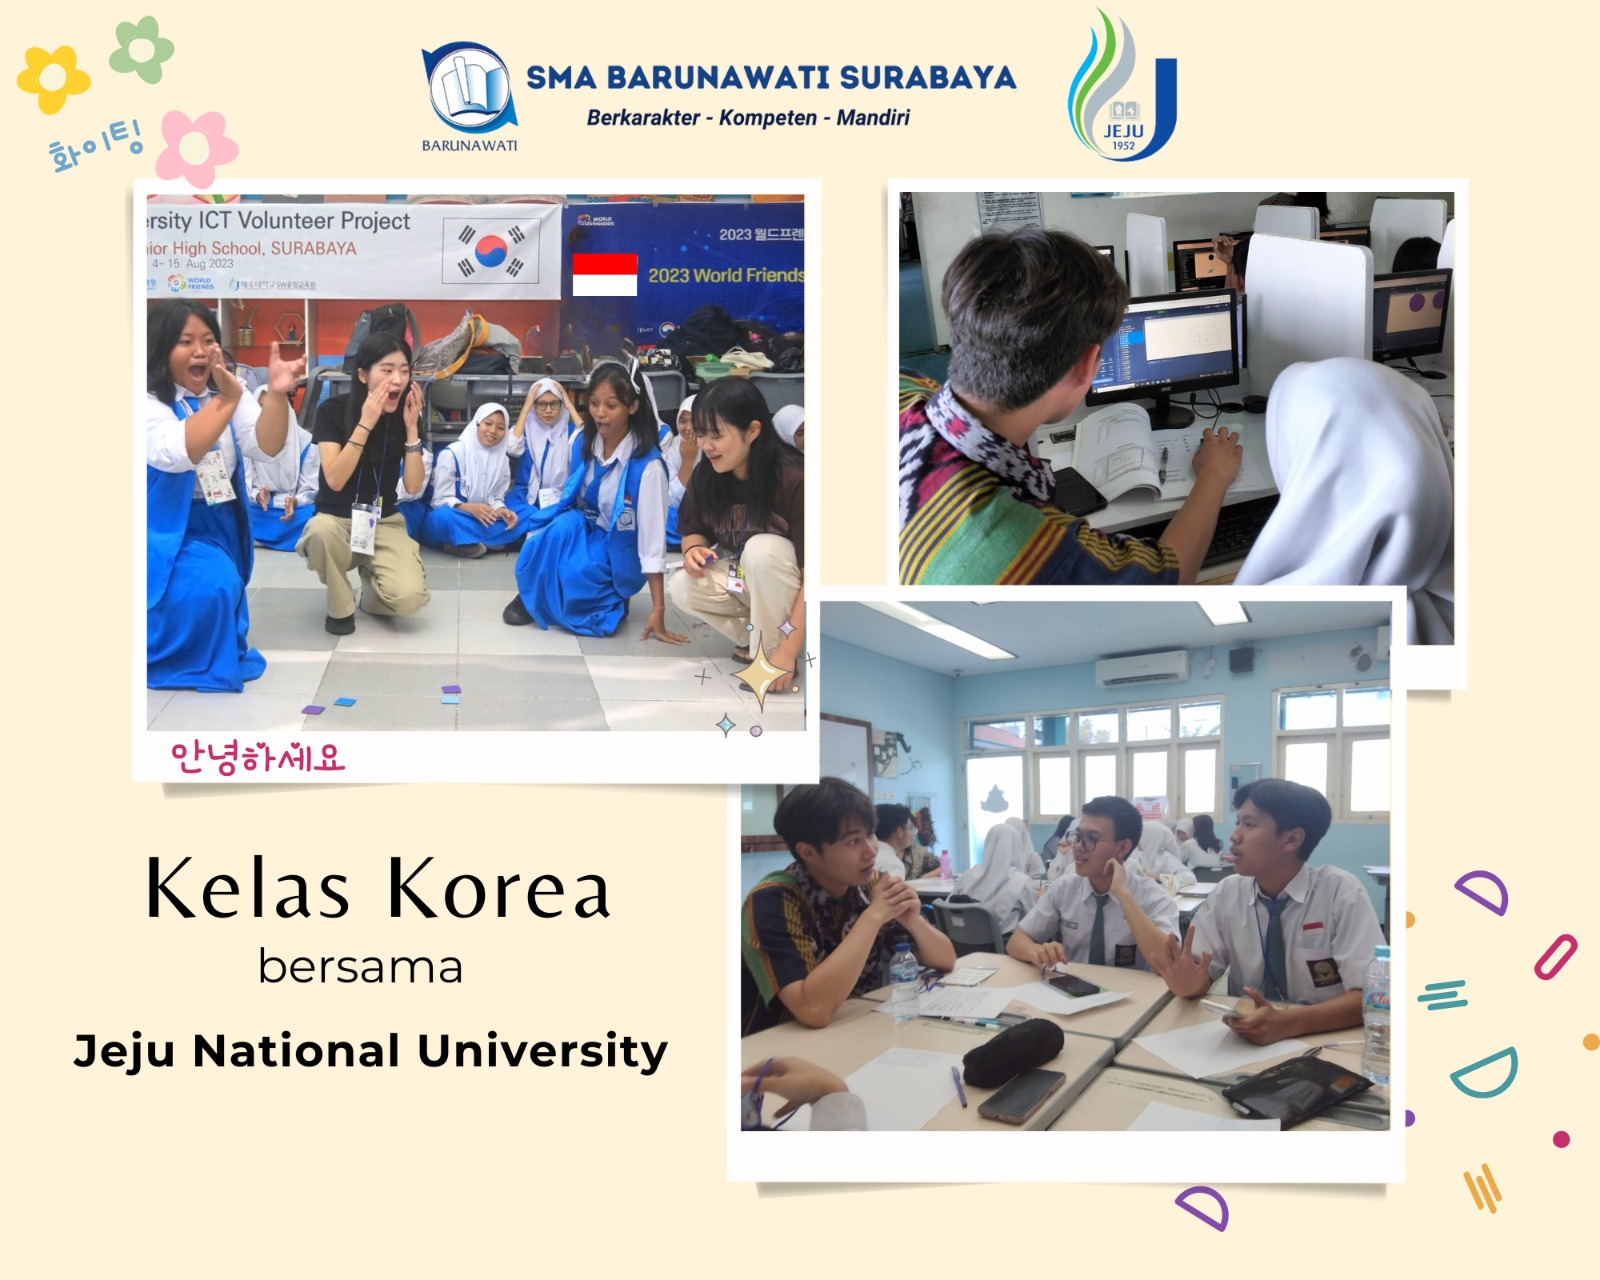 Program Kelas Korea bersama Jeju National University